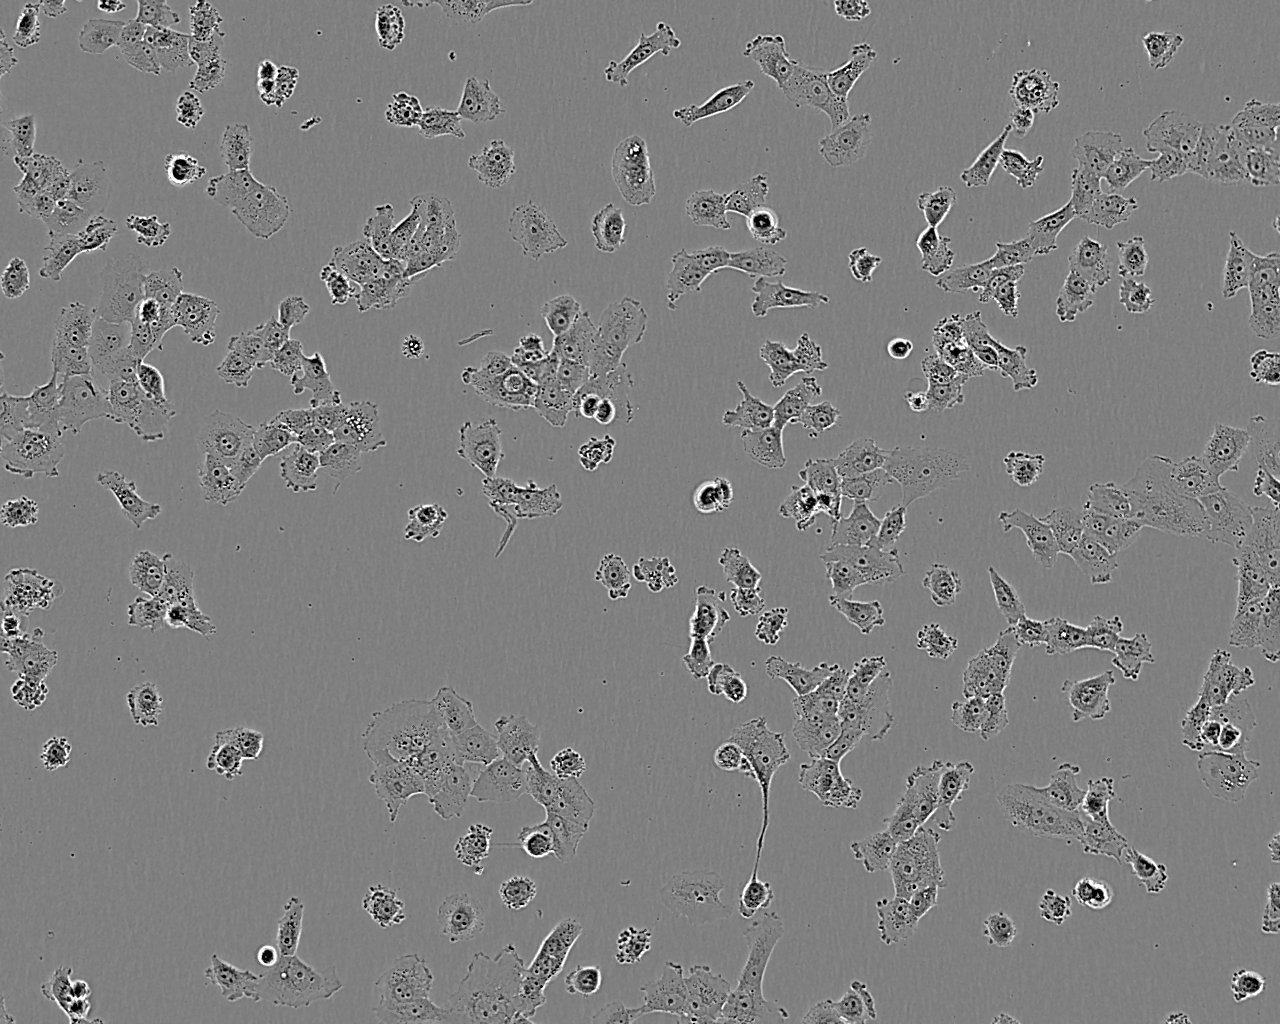 G-402 epithelioid cells人肾平滑肌瘤细胞系,G-402 epithelioid cells